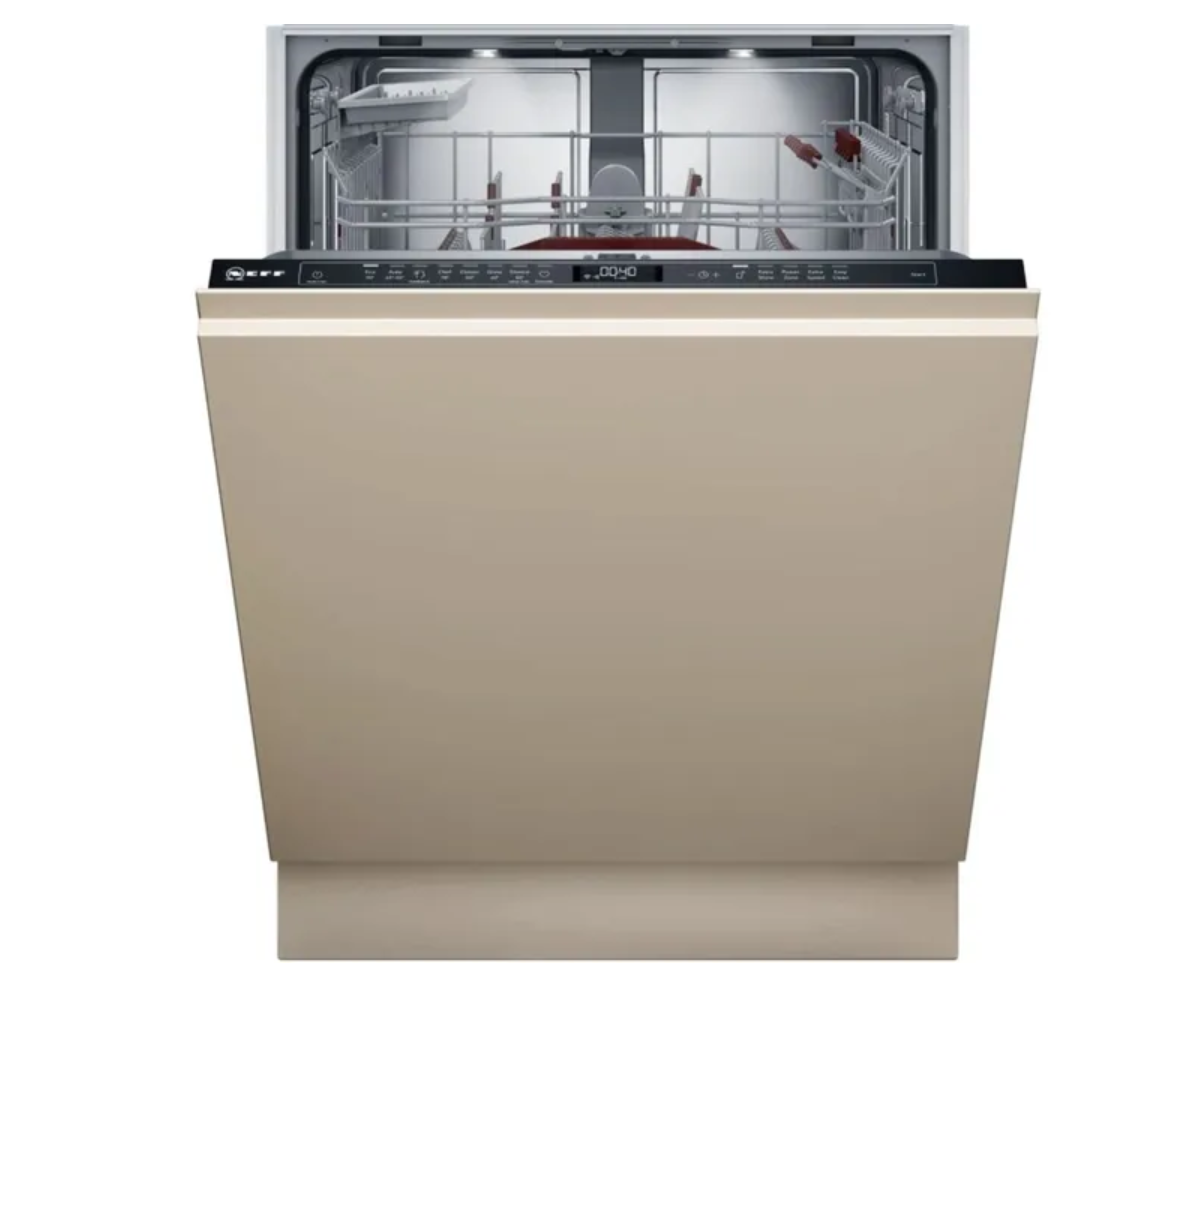 Встраиваемая посудомоечная машина Neff S157ZB801E встраиваемая посудомоечная машина neff s157zb801e